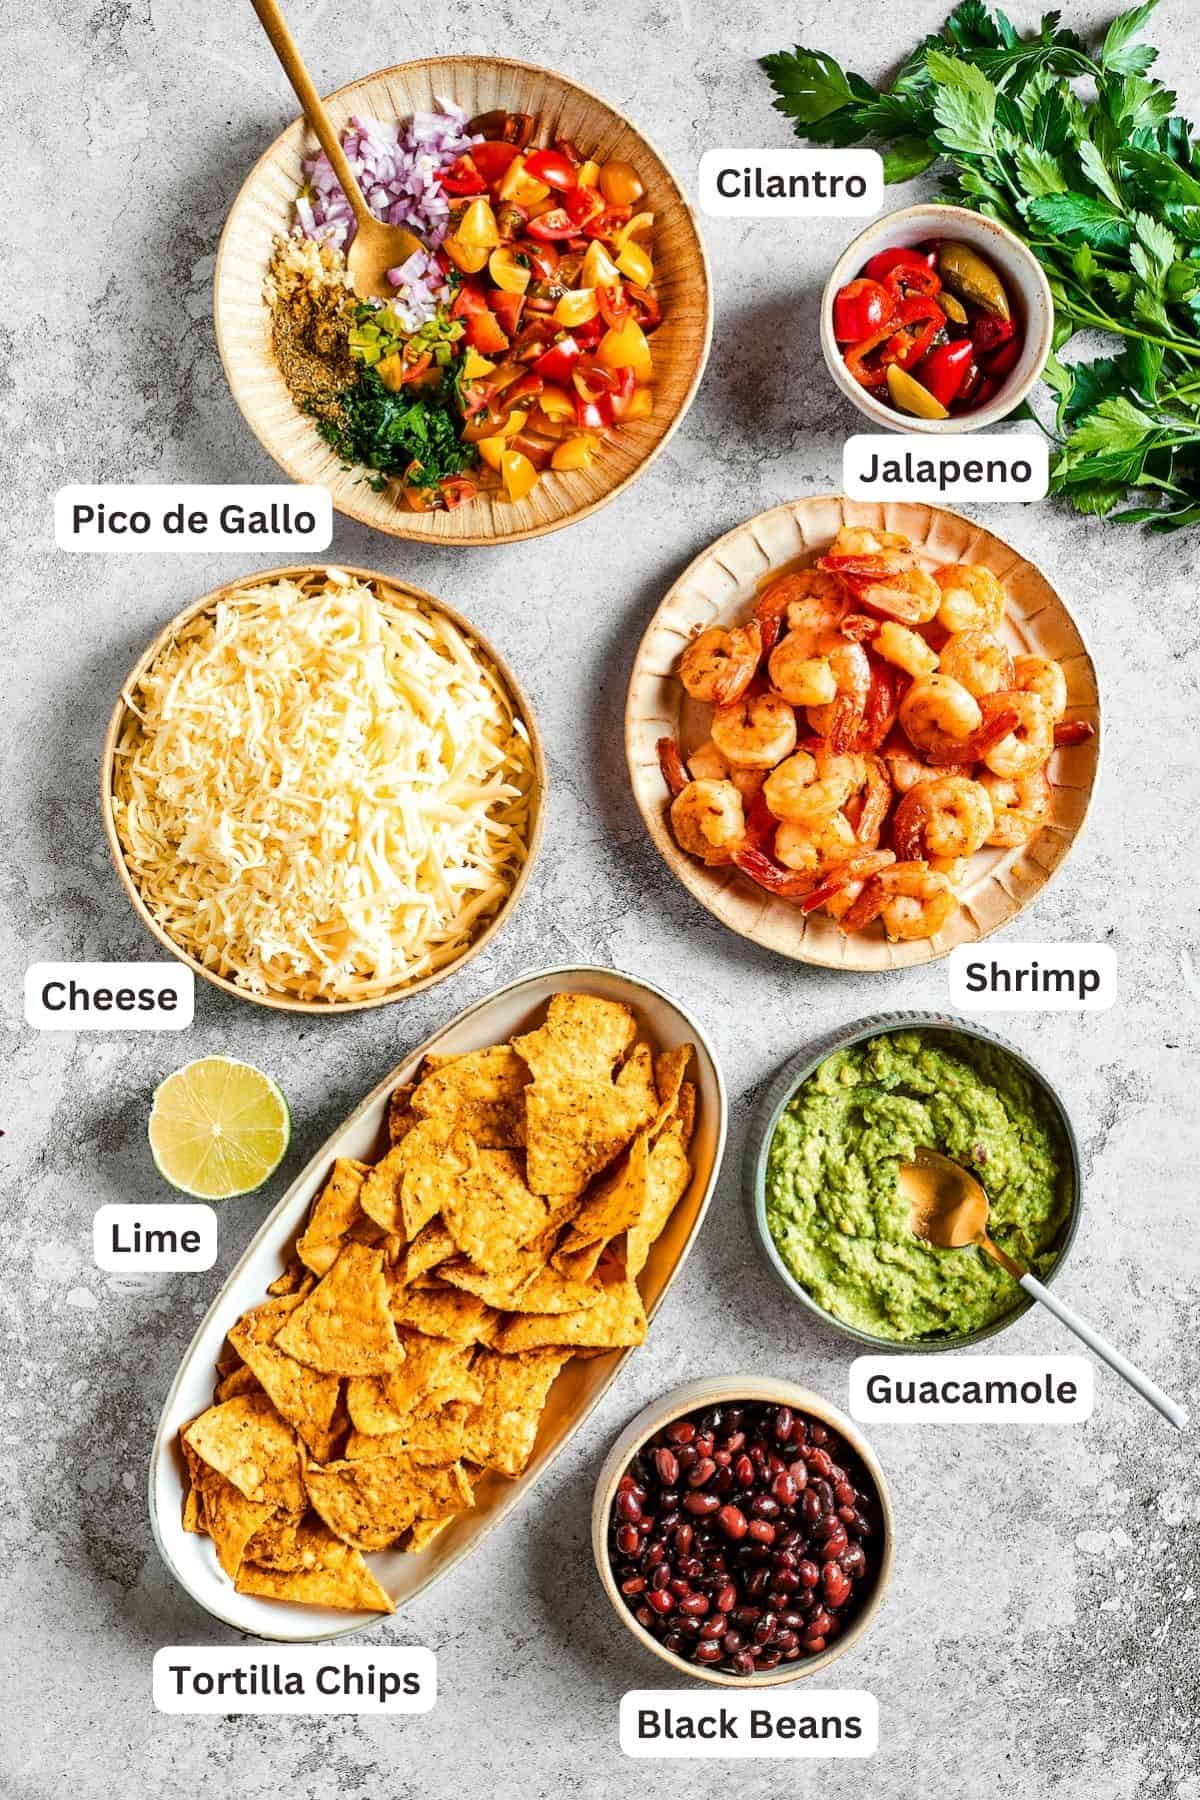 Ingredients for shrimp nachos are shown: tortilla chips, pico de Gallo, guacamole, shrimp, lime, cheese, jalapeno.